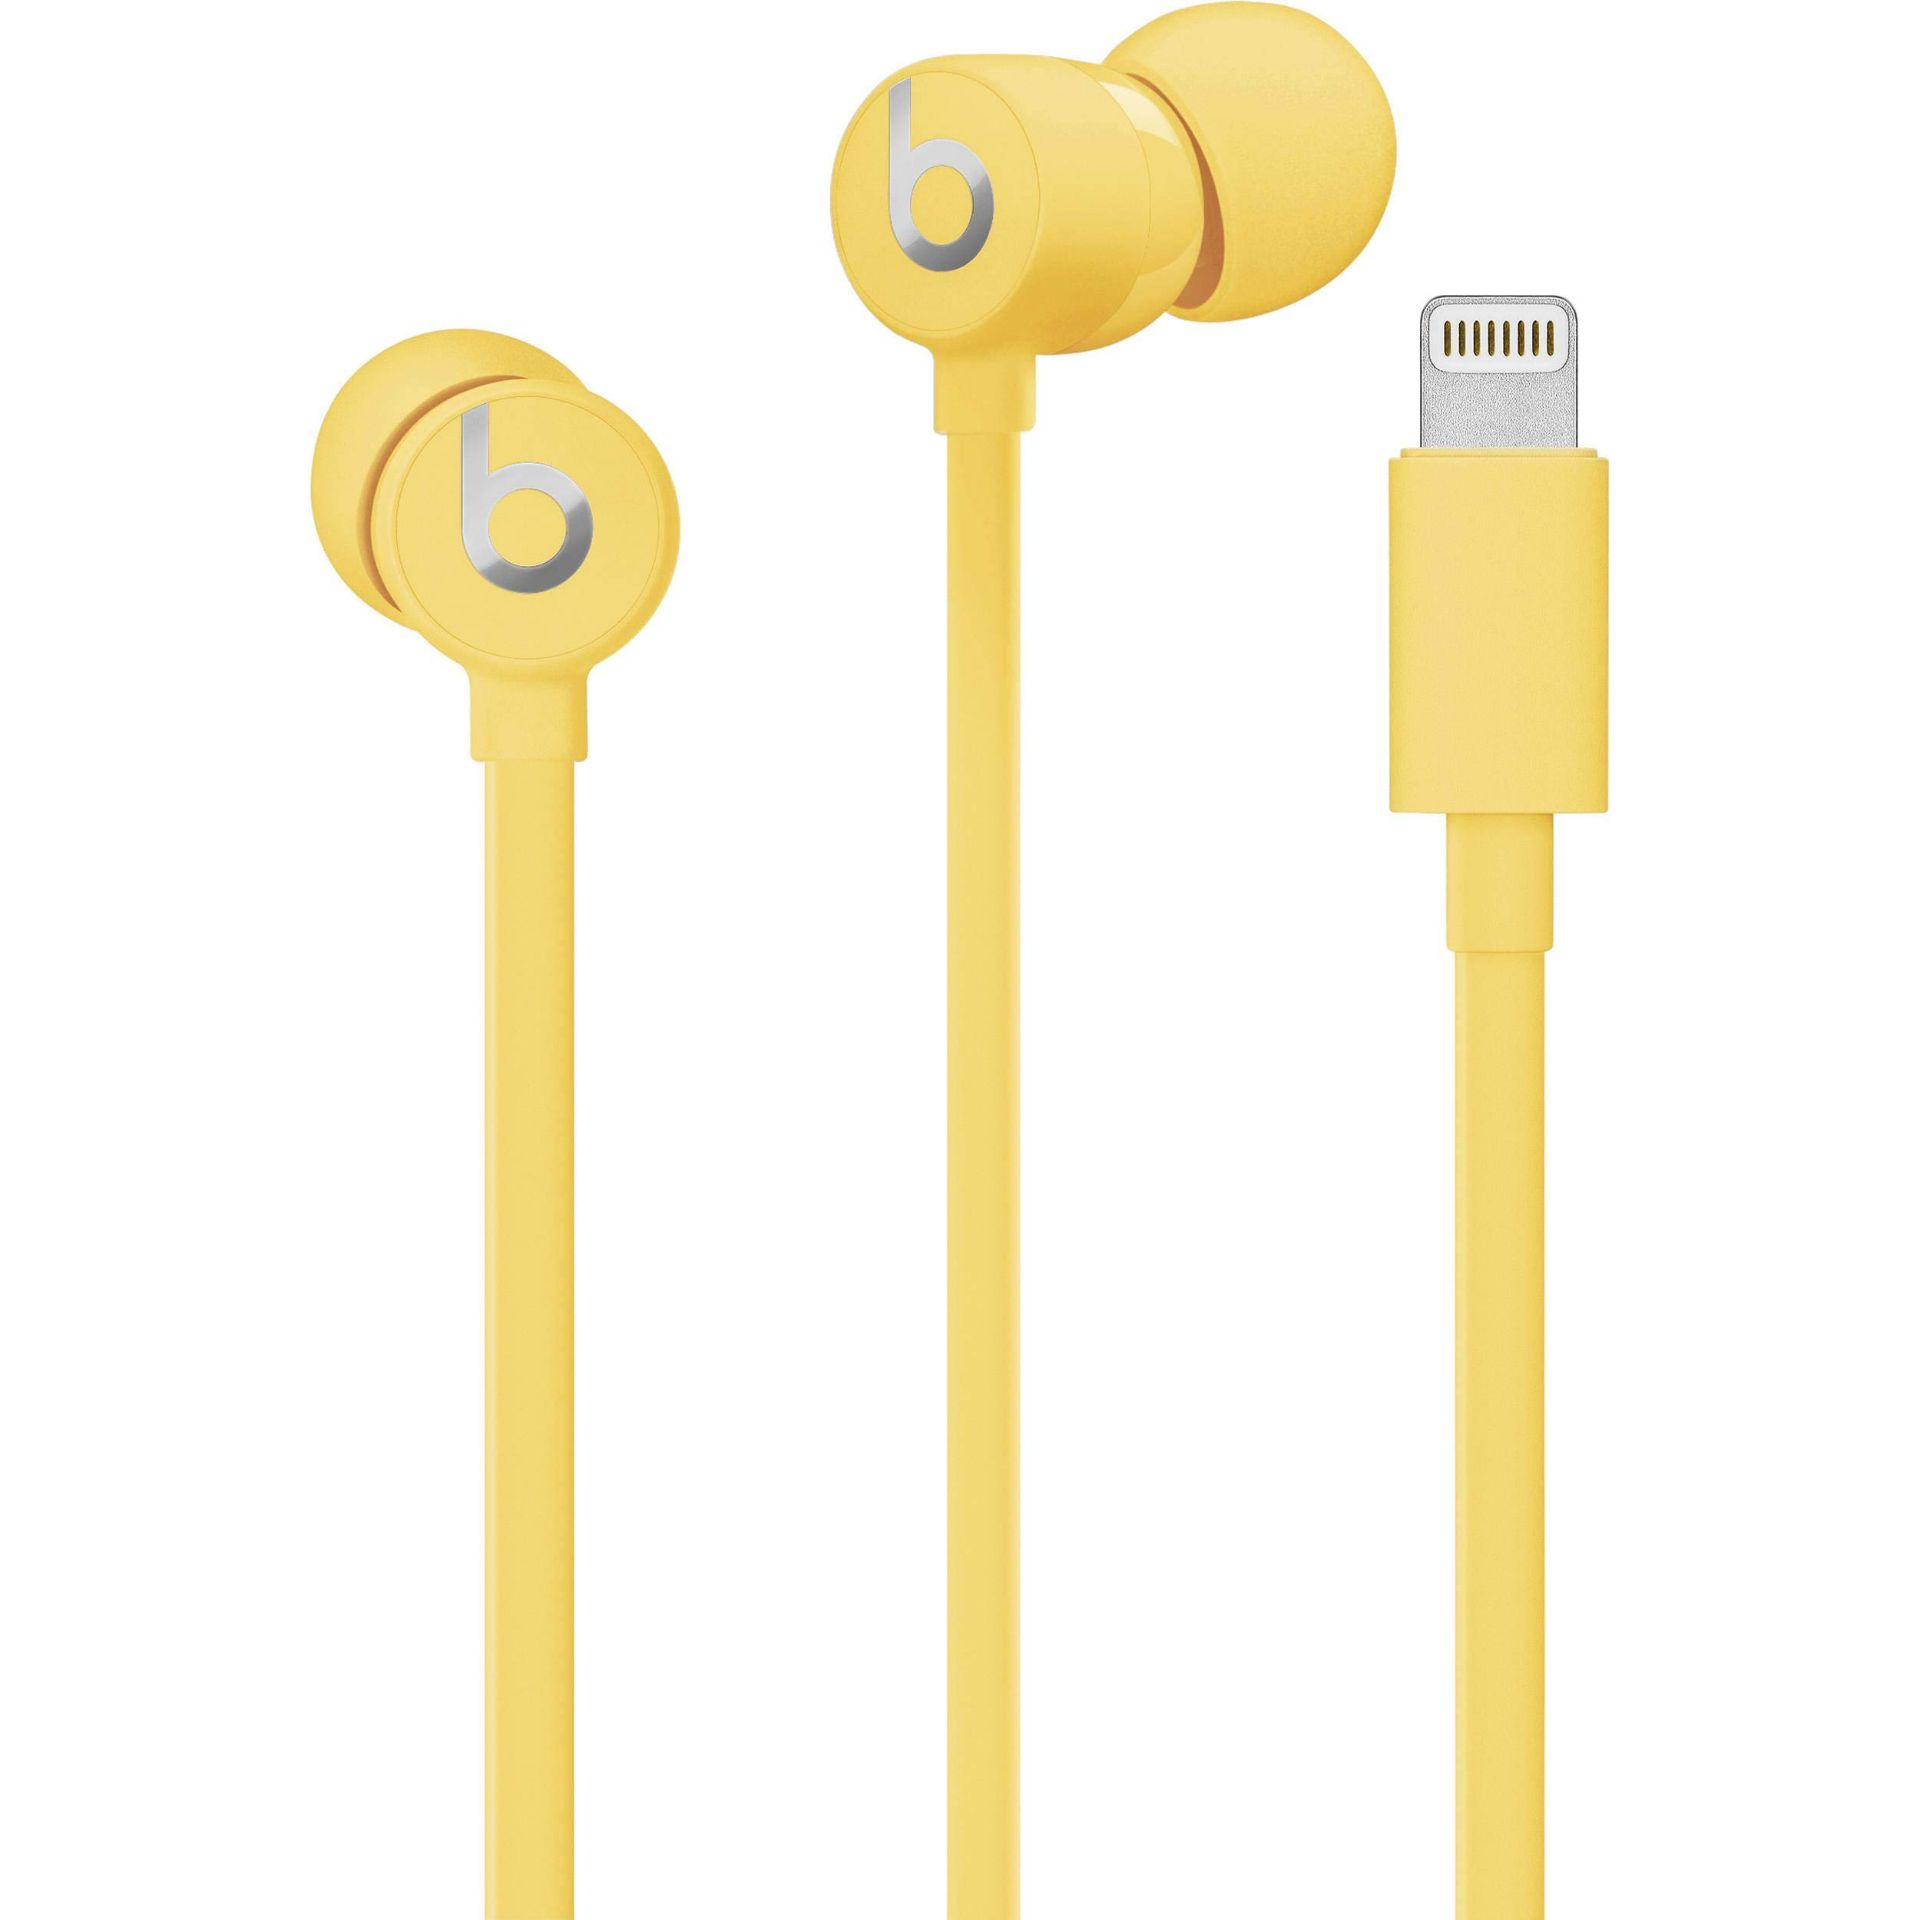 + VAT Brand New UrBeats 3 Earphones With Lightning Connector - Yellow - Ergonomic Design - High